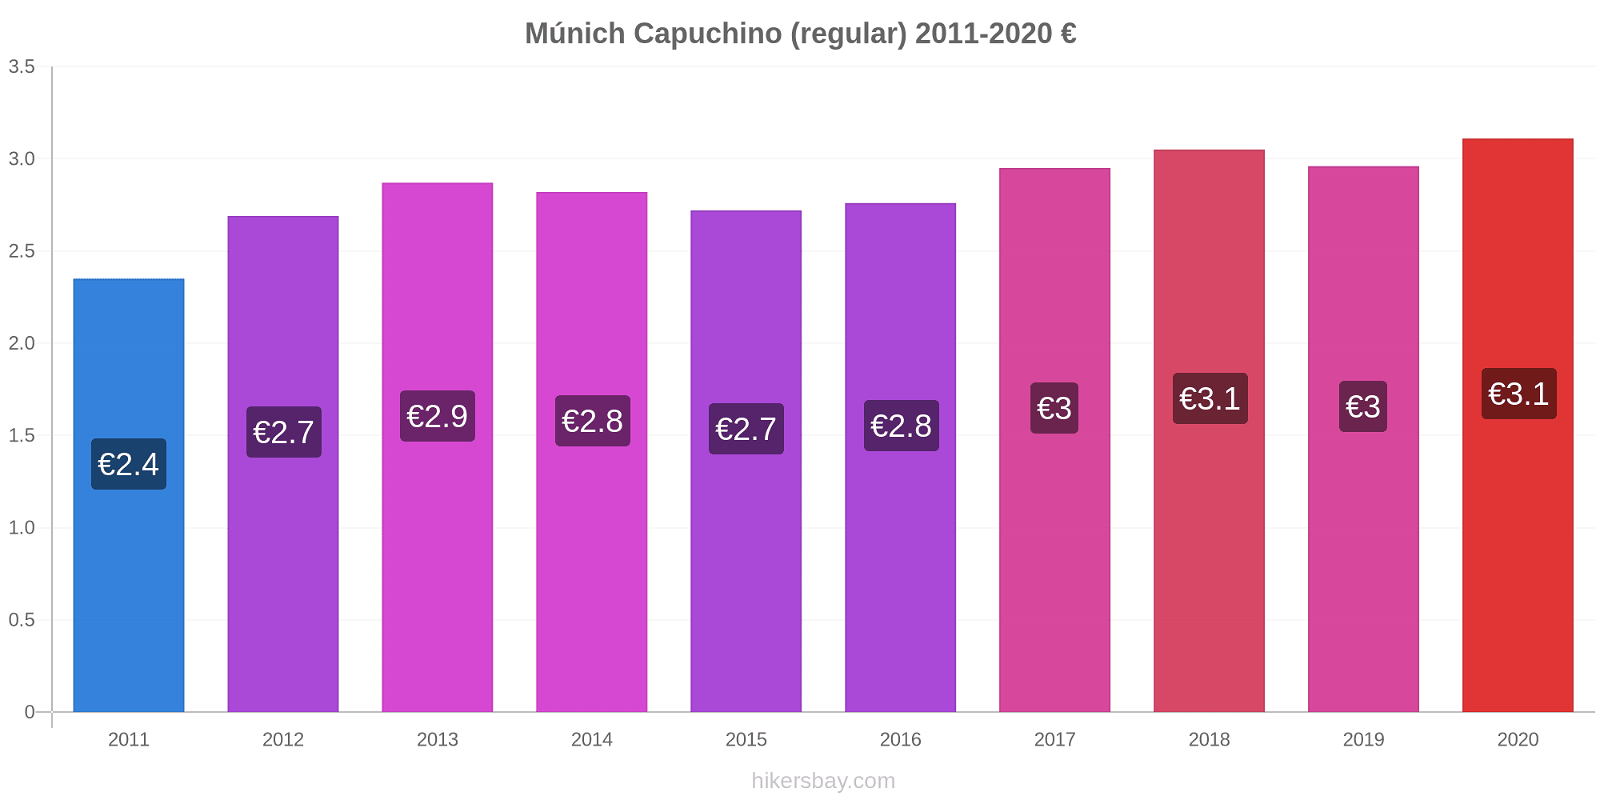 Múnich cambios de precios Capuchino (regular) hikersbay.com